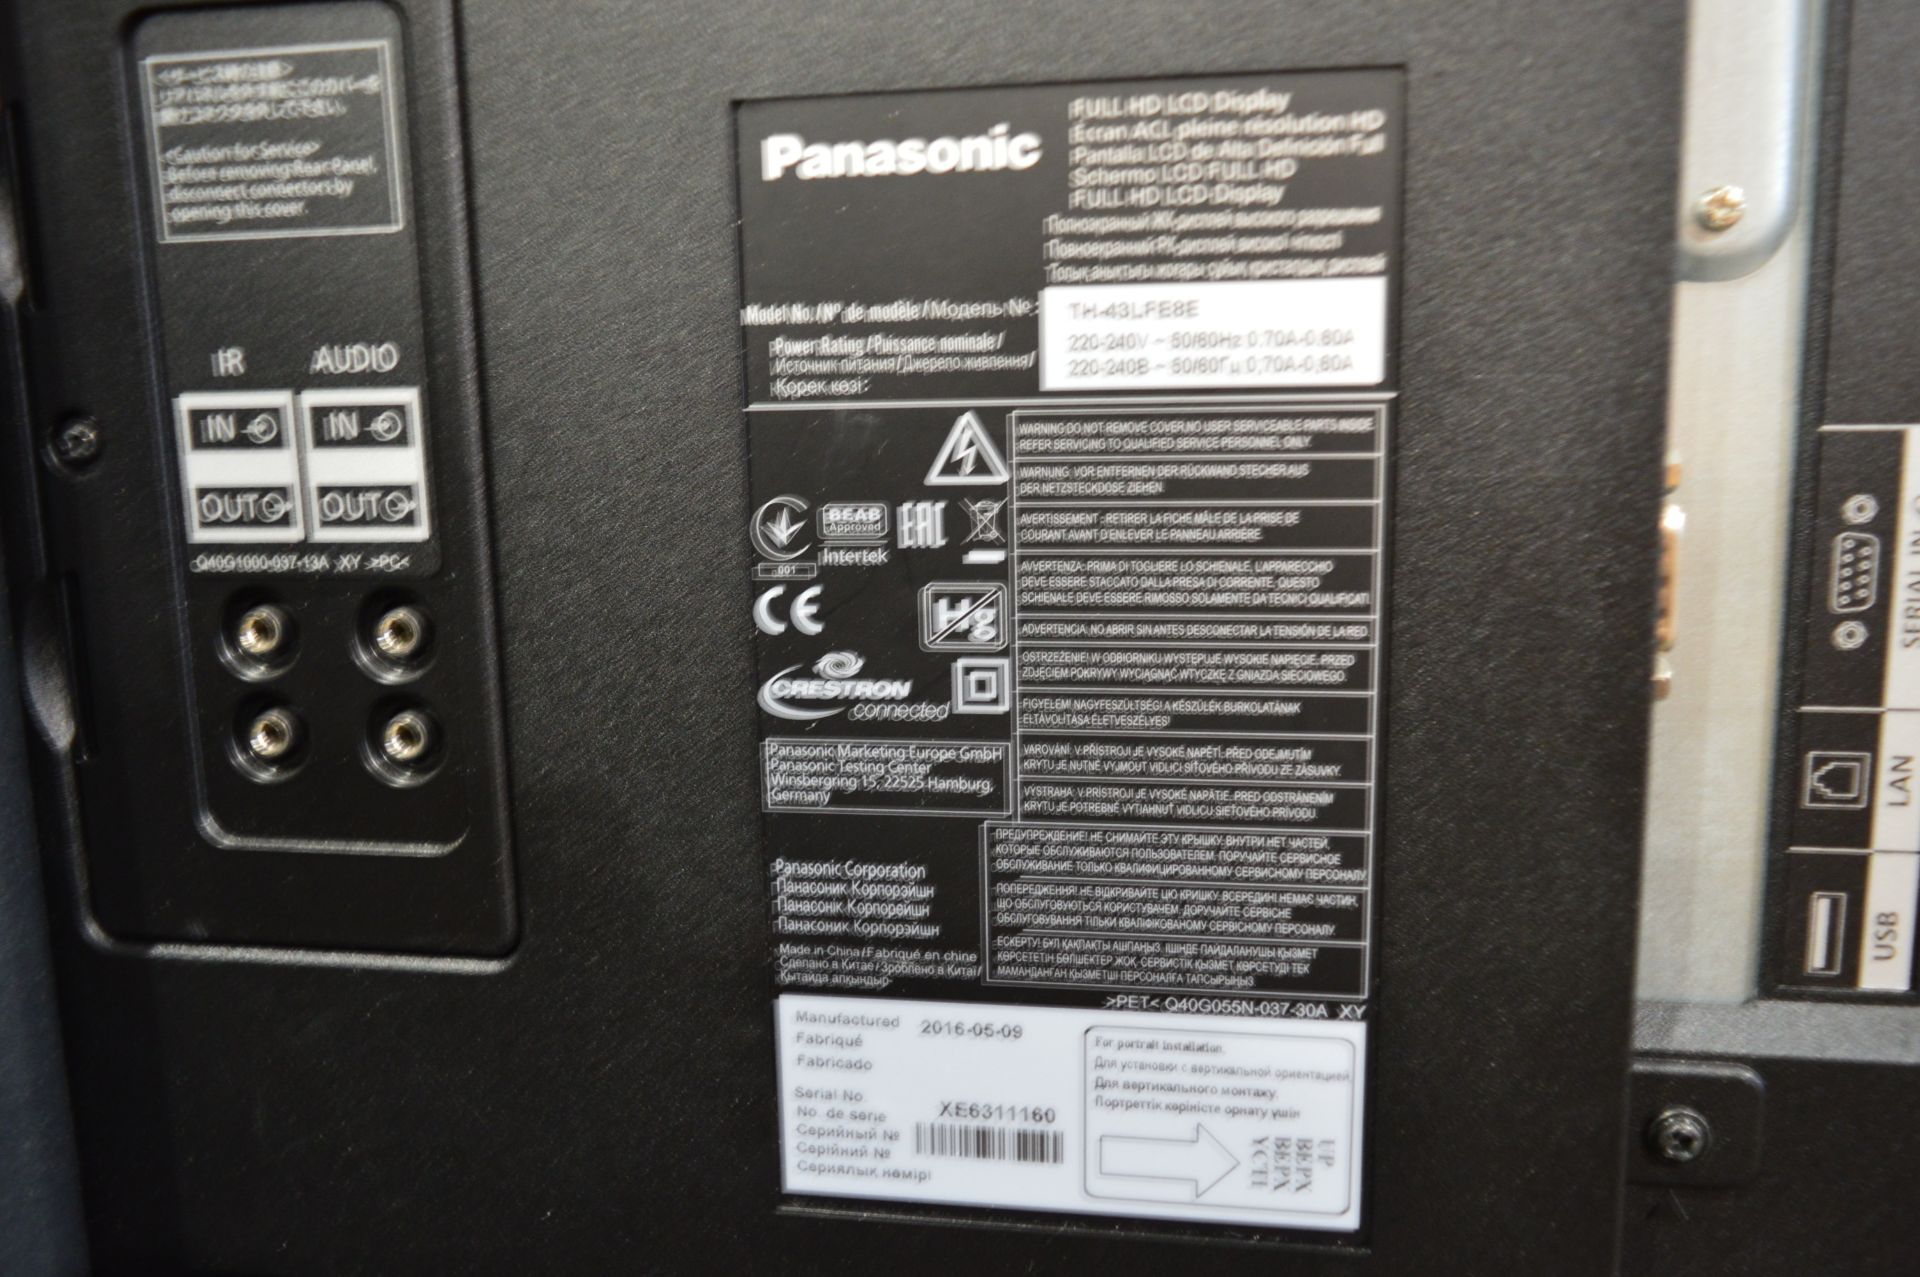 Panasonic, 43" full HD LCD display, Model TH-43LFE - Image 2 of 4